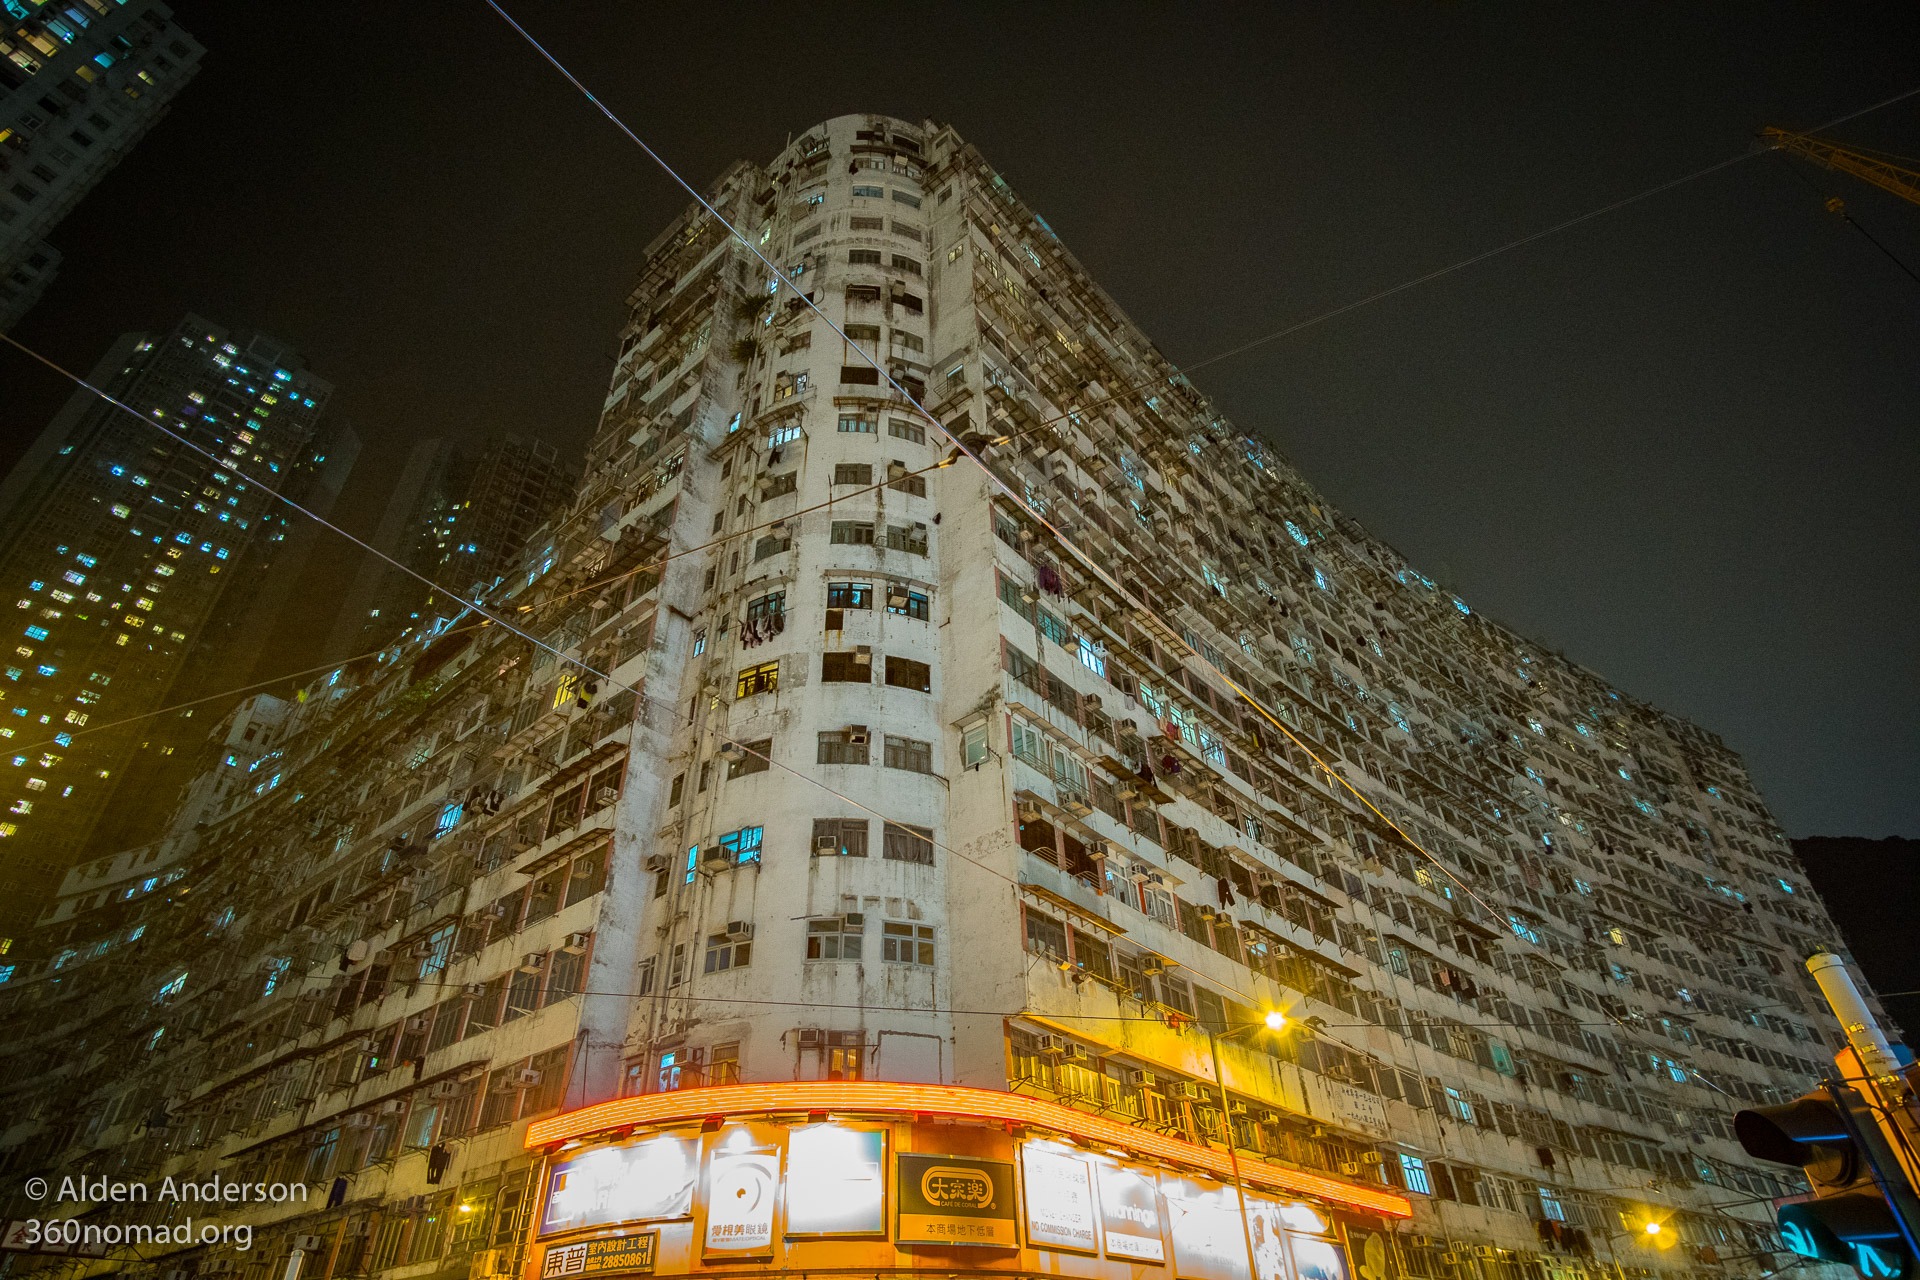 Hong Kong S Monster Building 360nomad